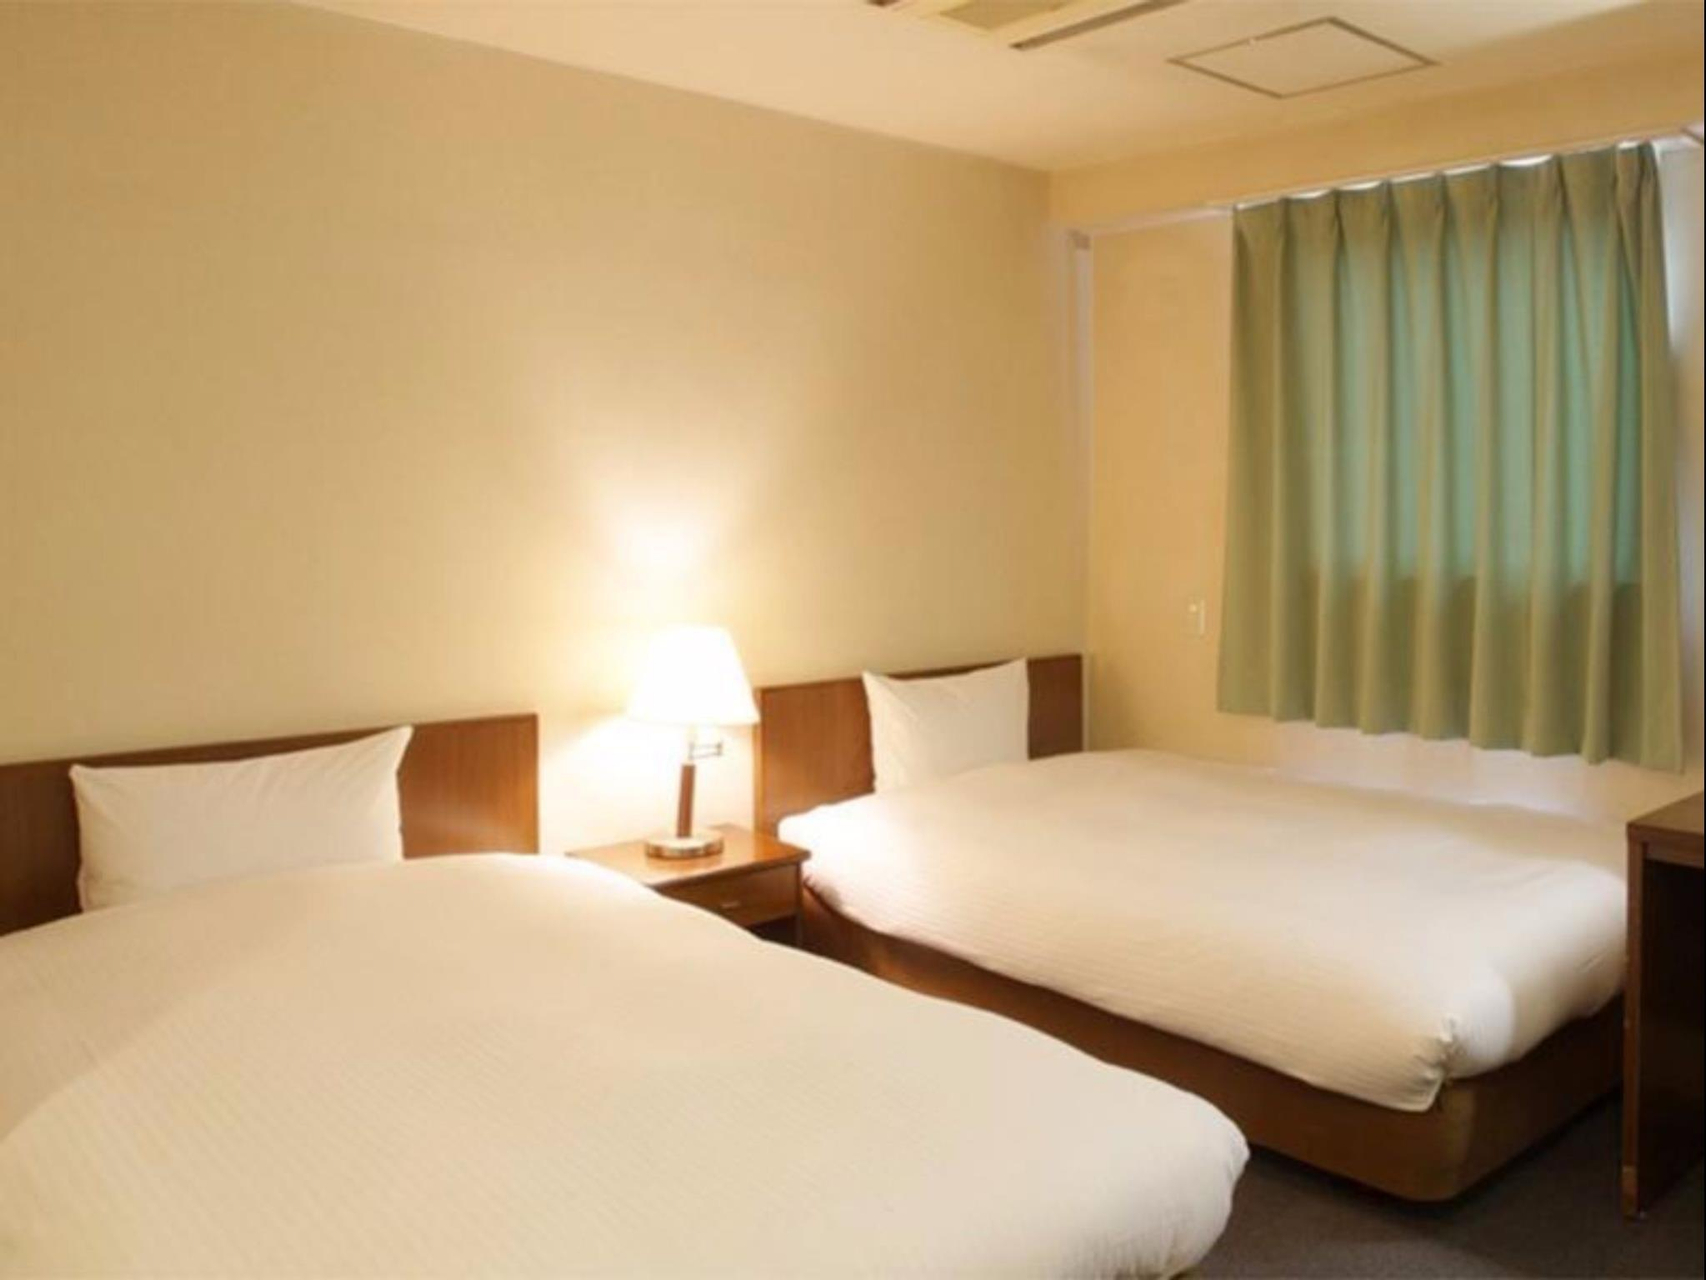 Bedroom 2, Hotel Green Arbor, Sendai